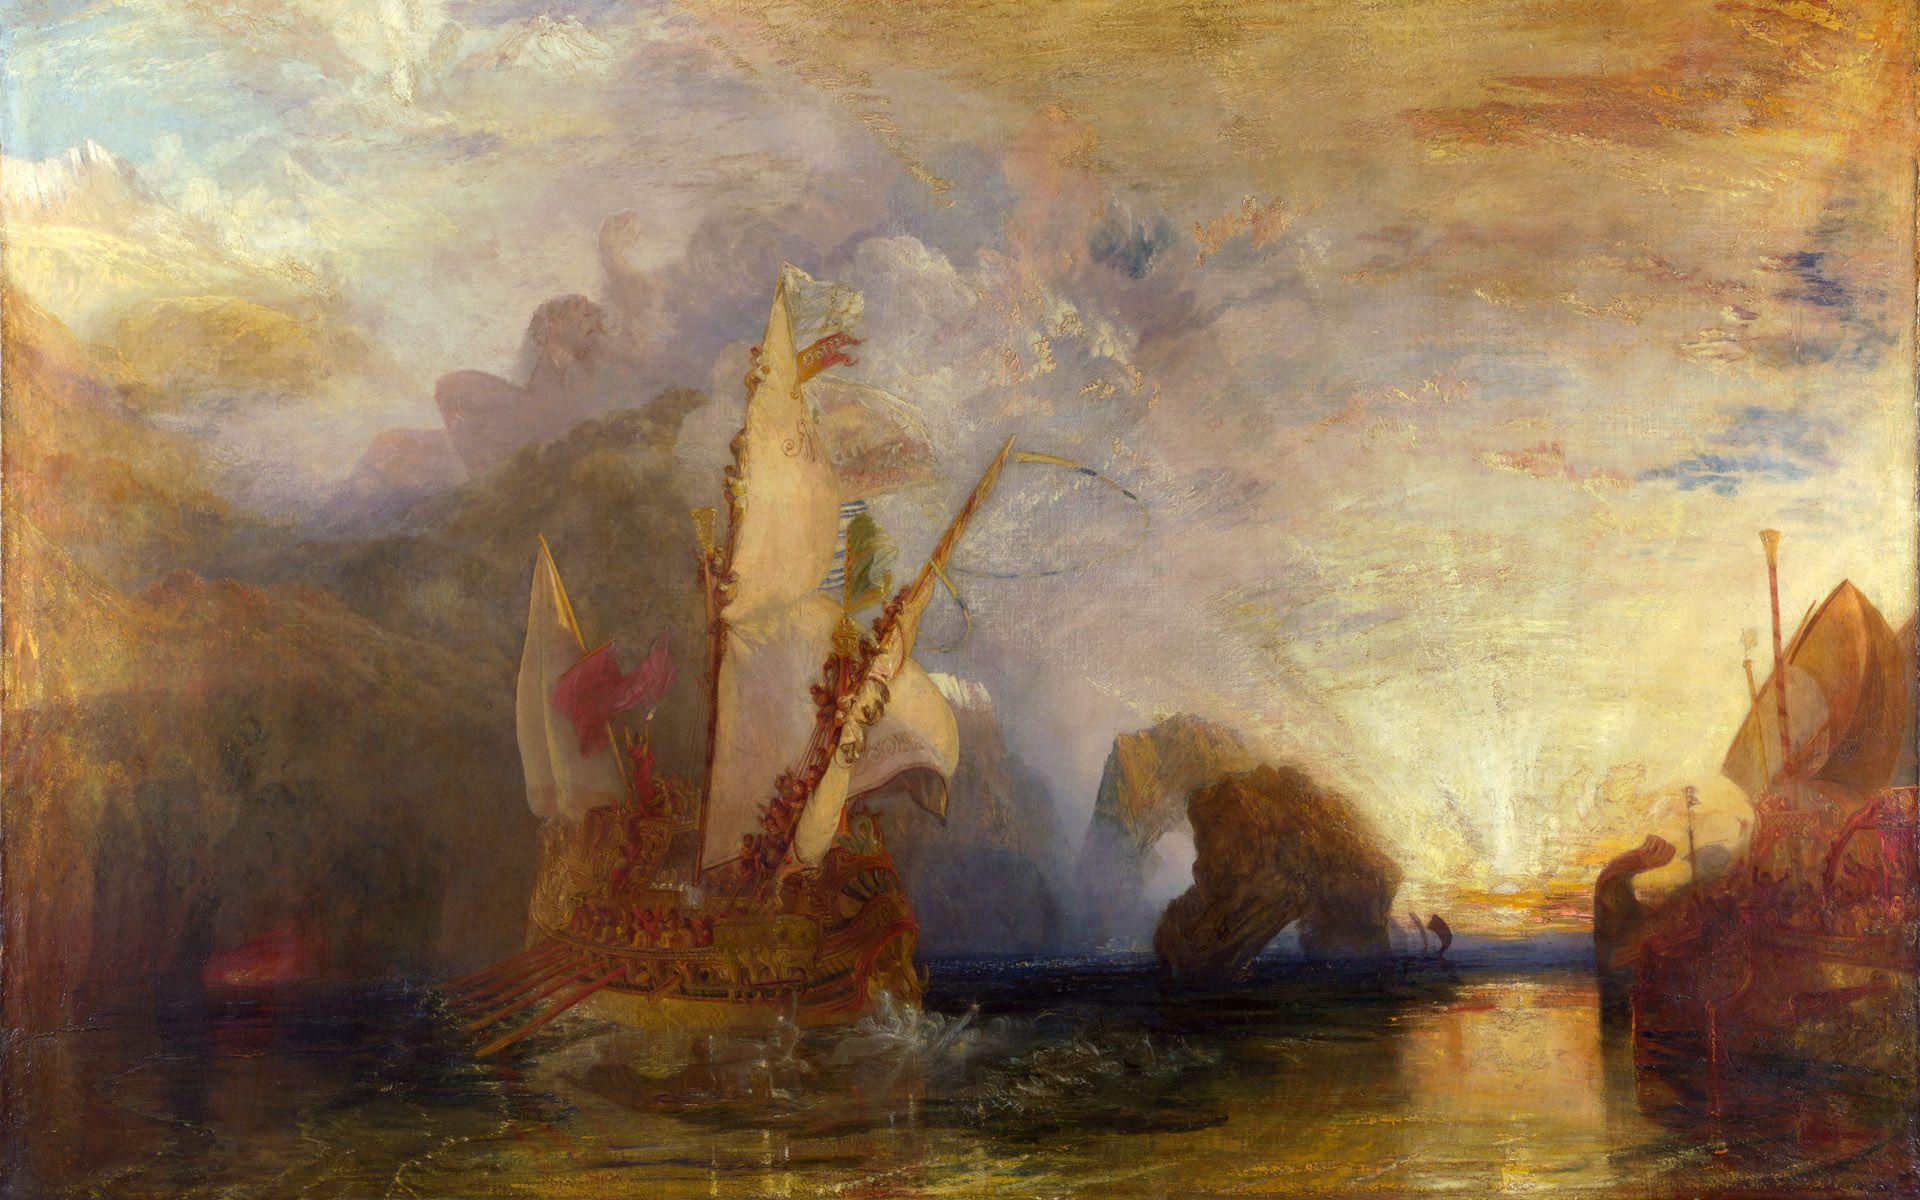 عکس تابلو نقاشی موج و کشتی اثر هنرمند معروف ویلیام ترنر